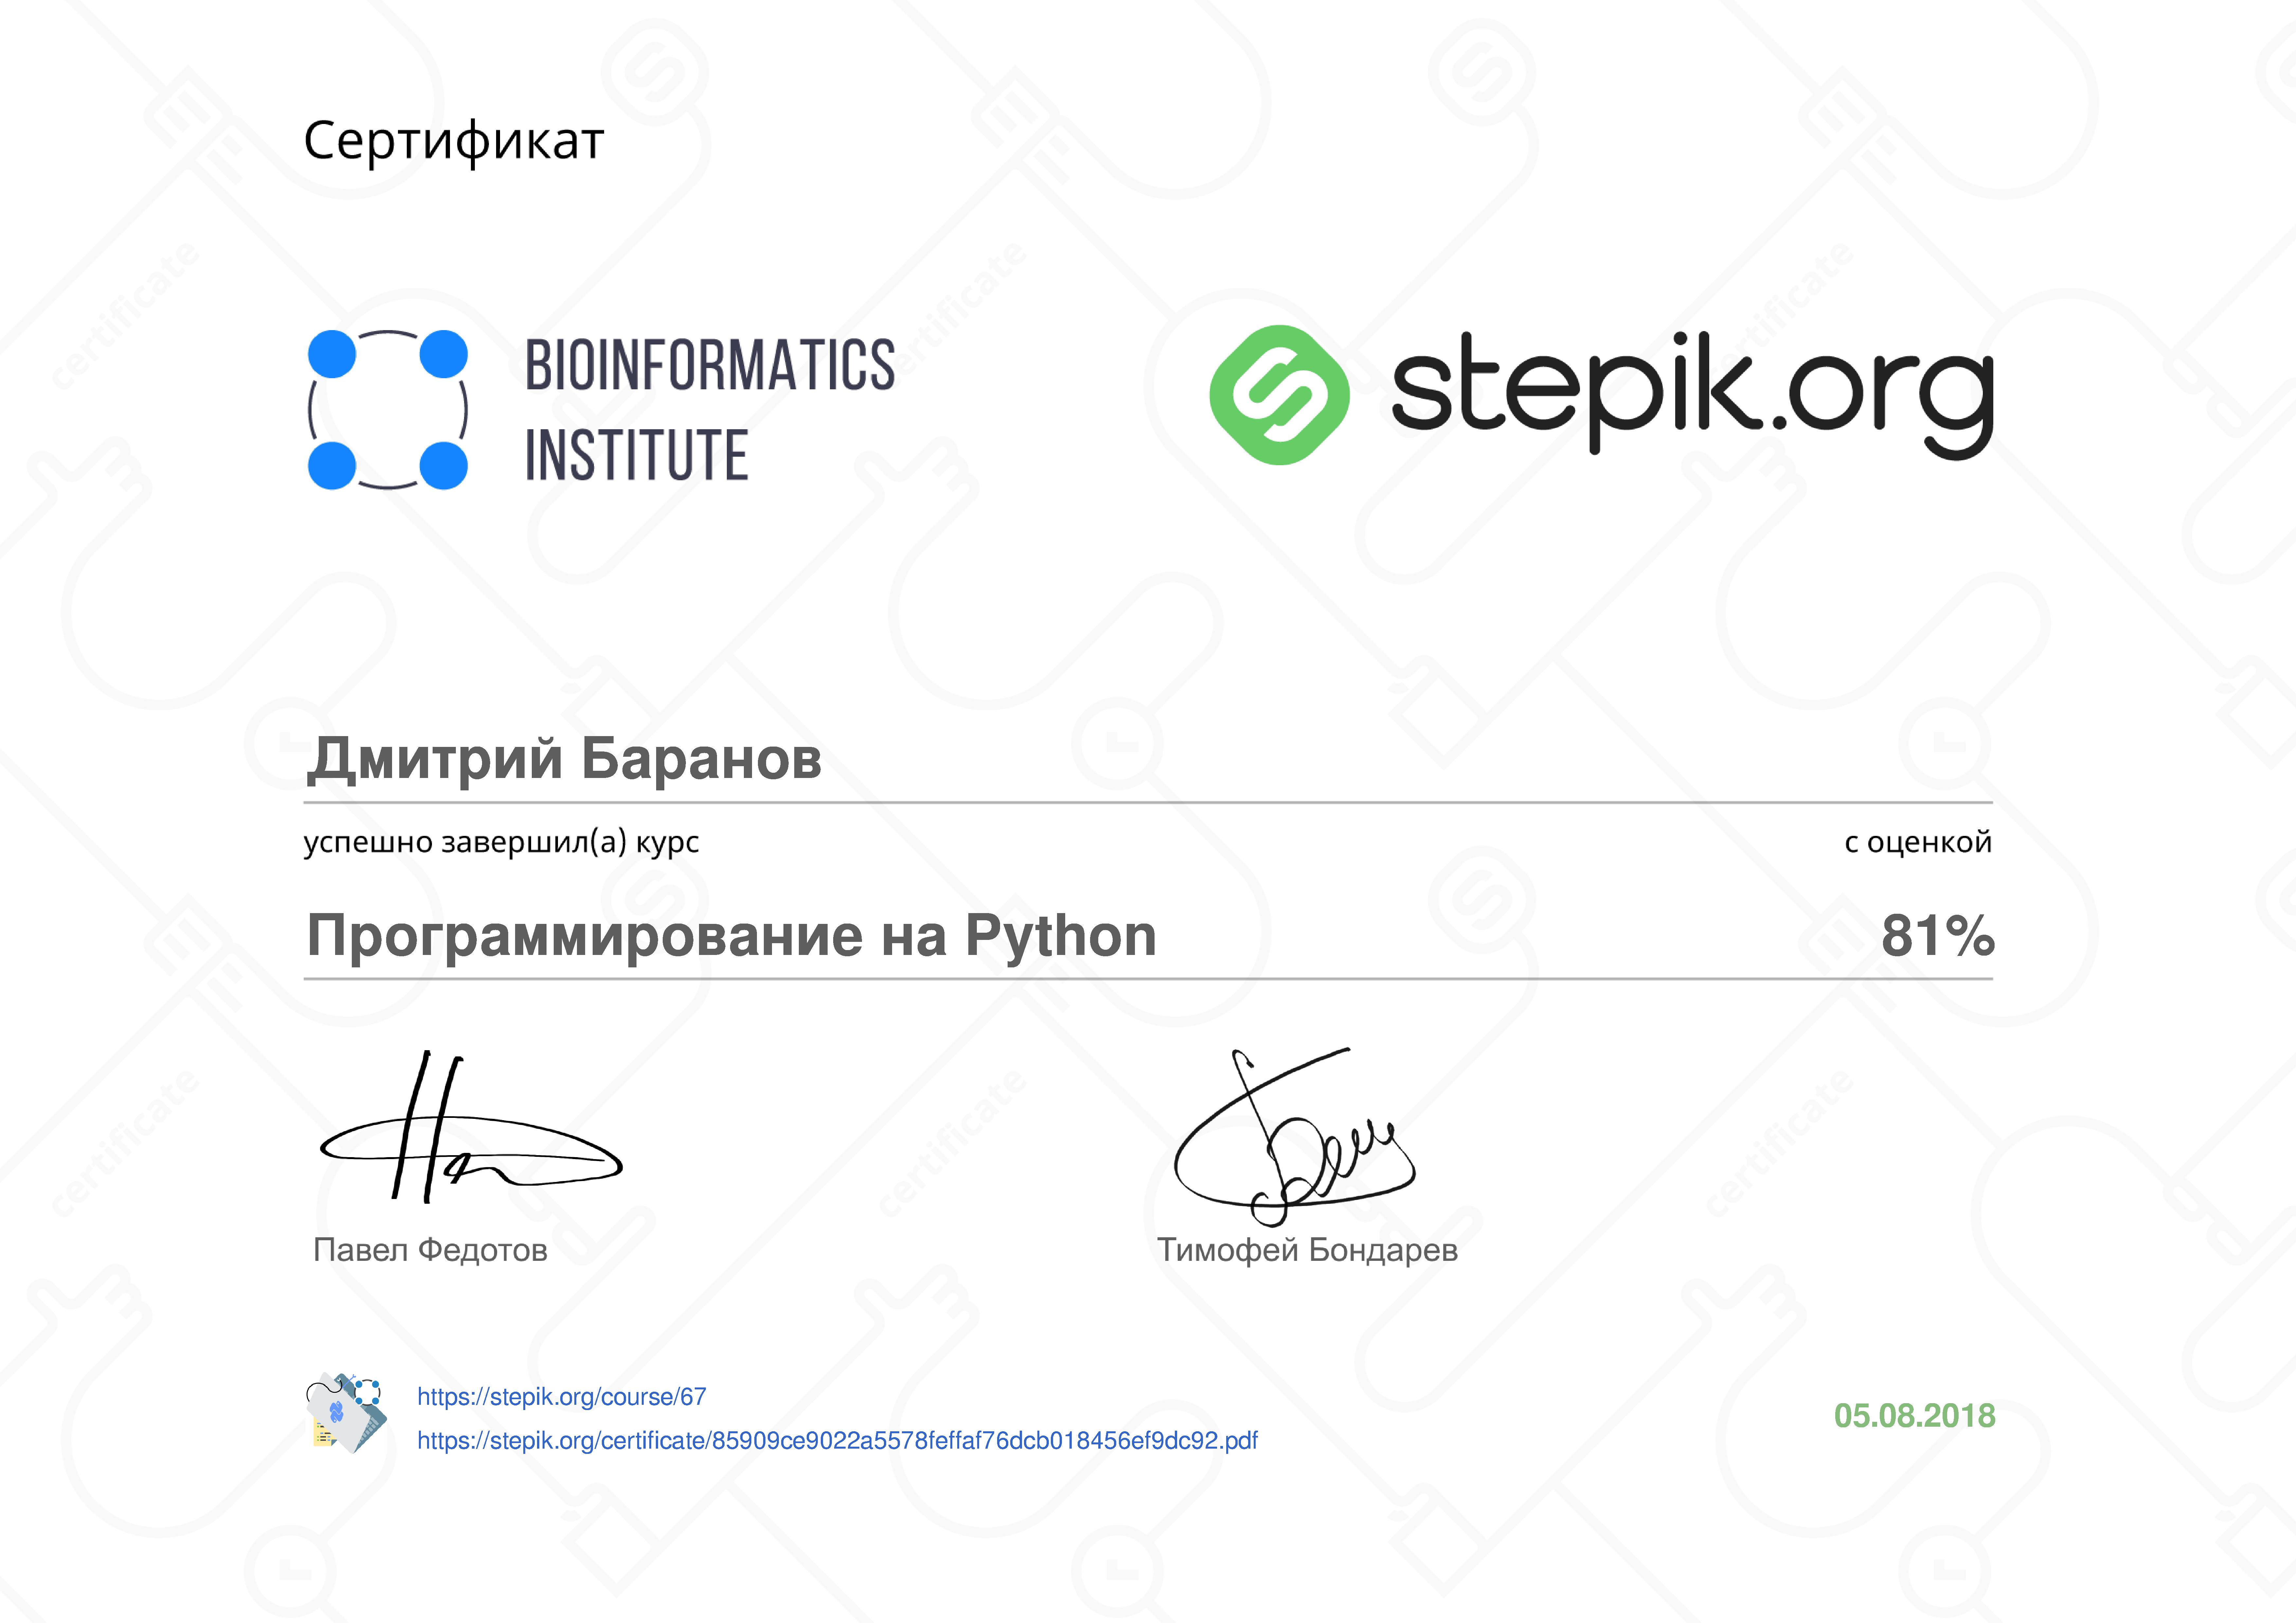 stepik-certificate-67-85909ce.jpg